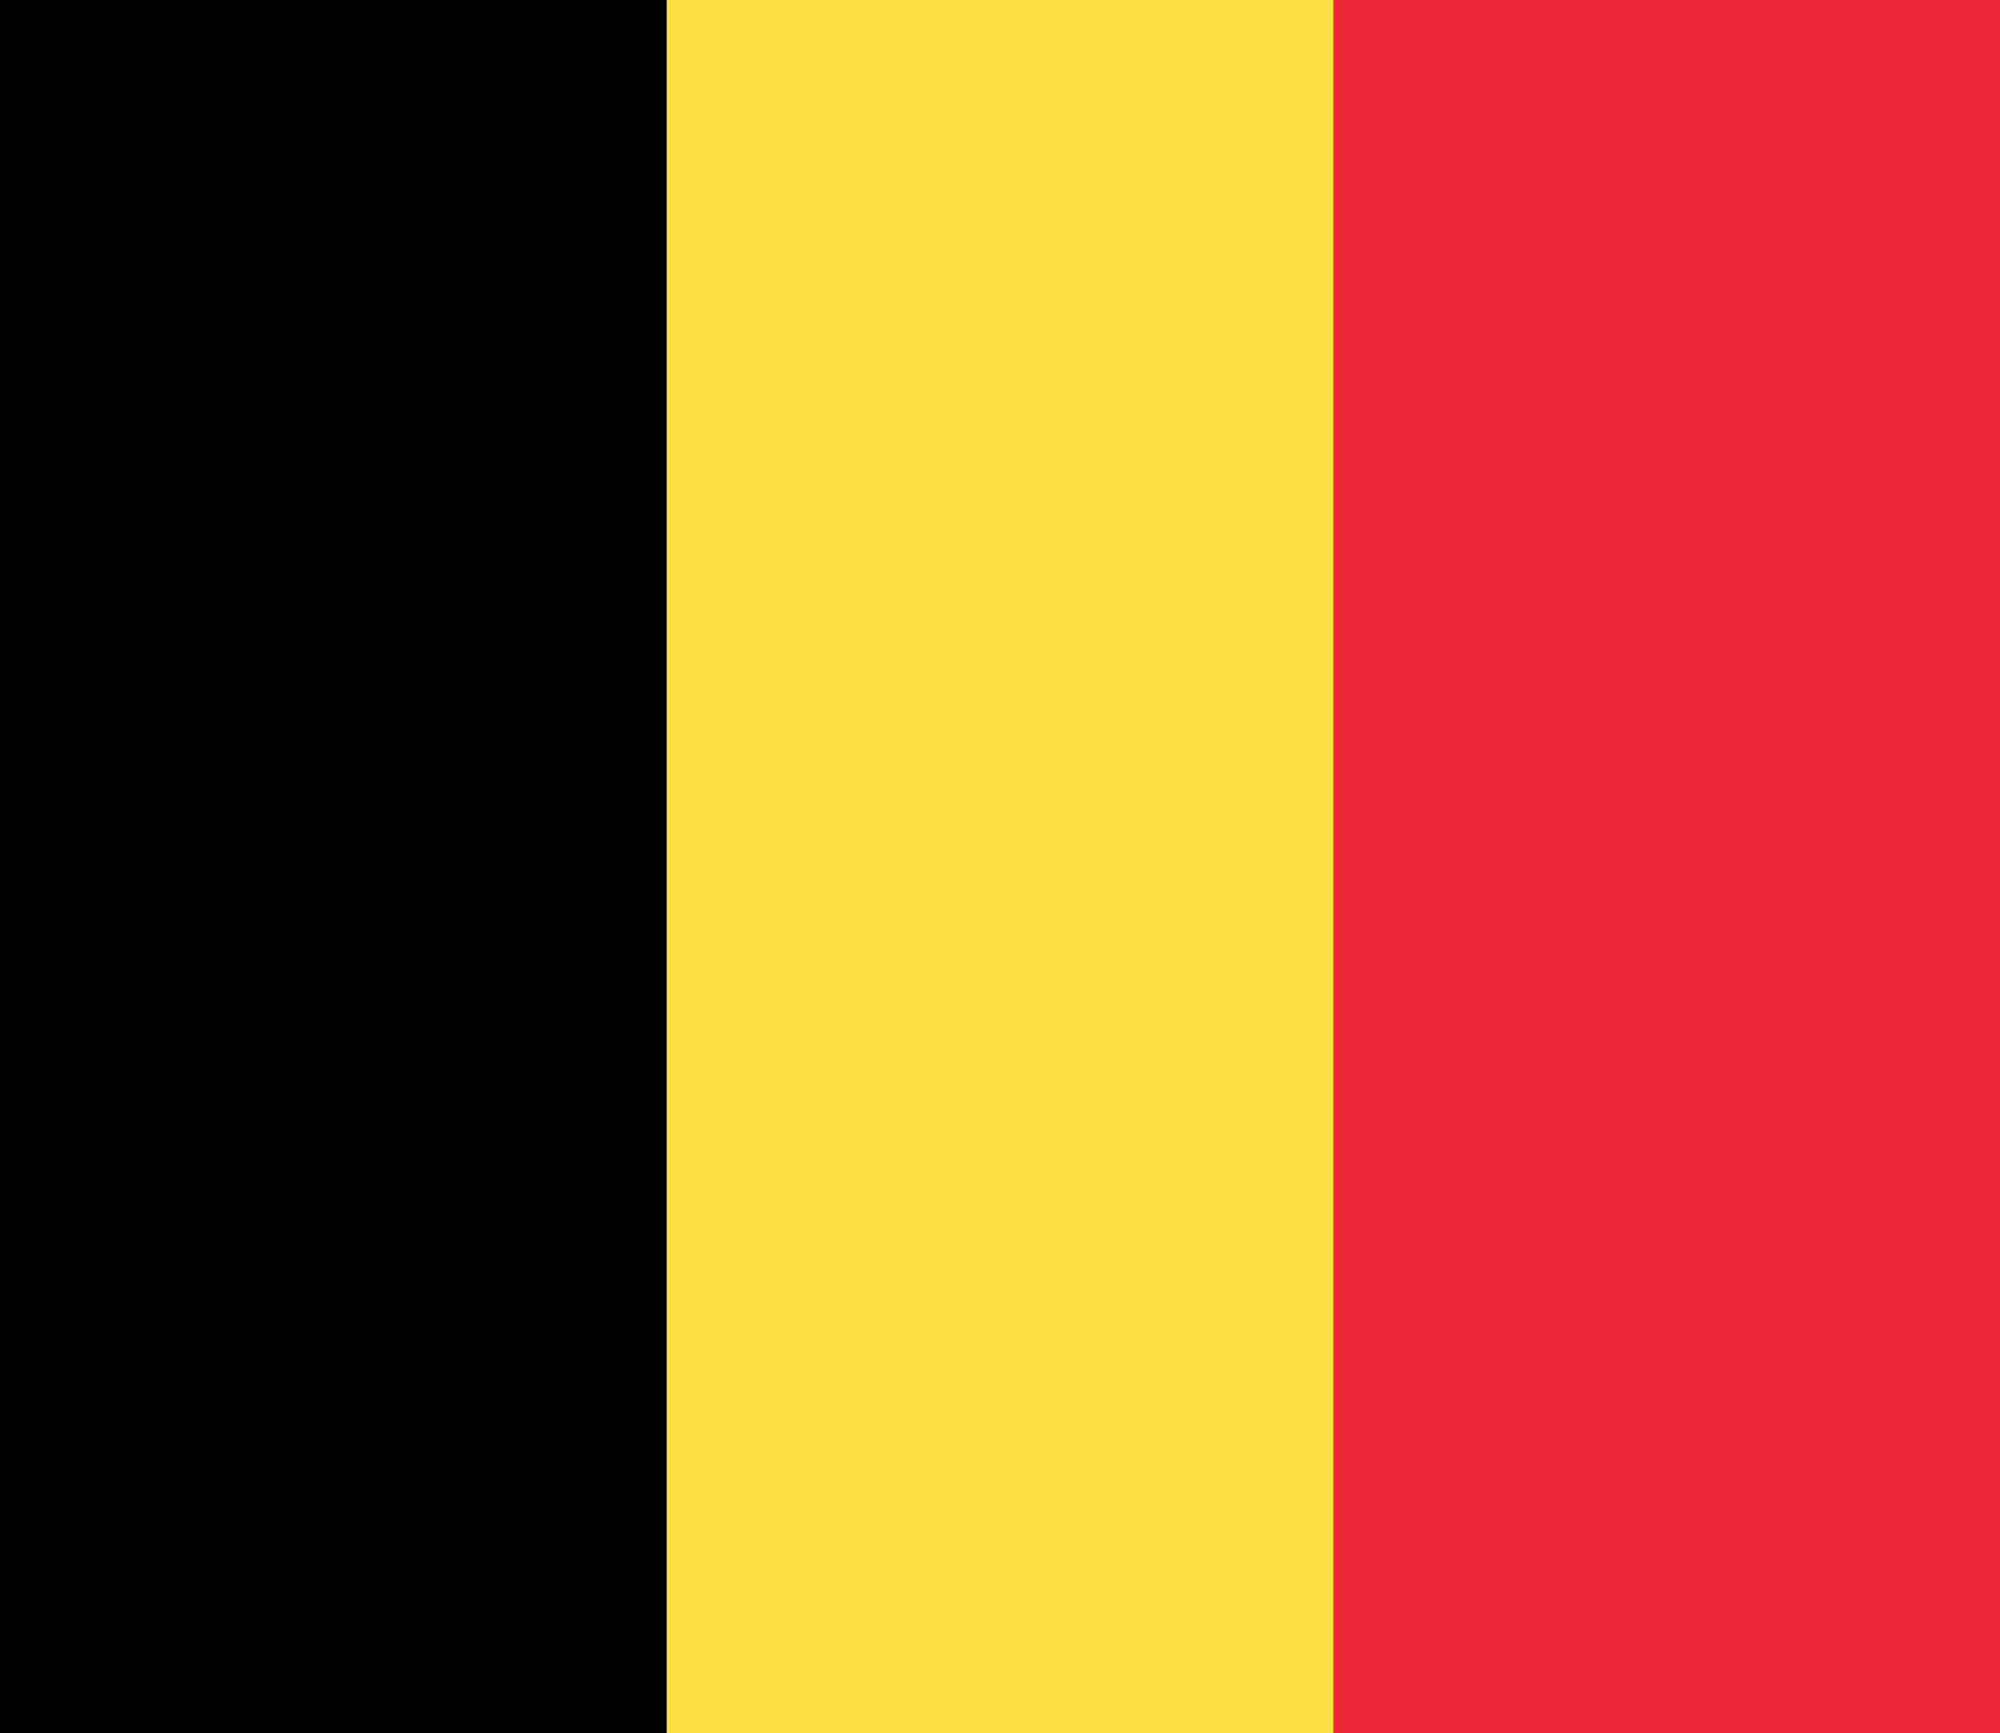 https://upload.wikimedia.org/wikipedia/commons/thumb/6/65/Flag_of_Belgium.svg/2000px-Flag_of_Belgium.svg.png